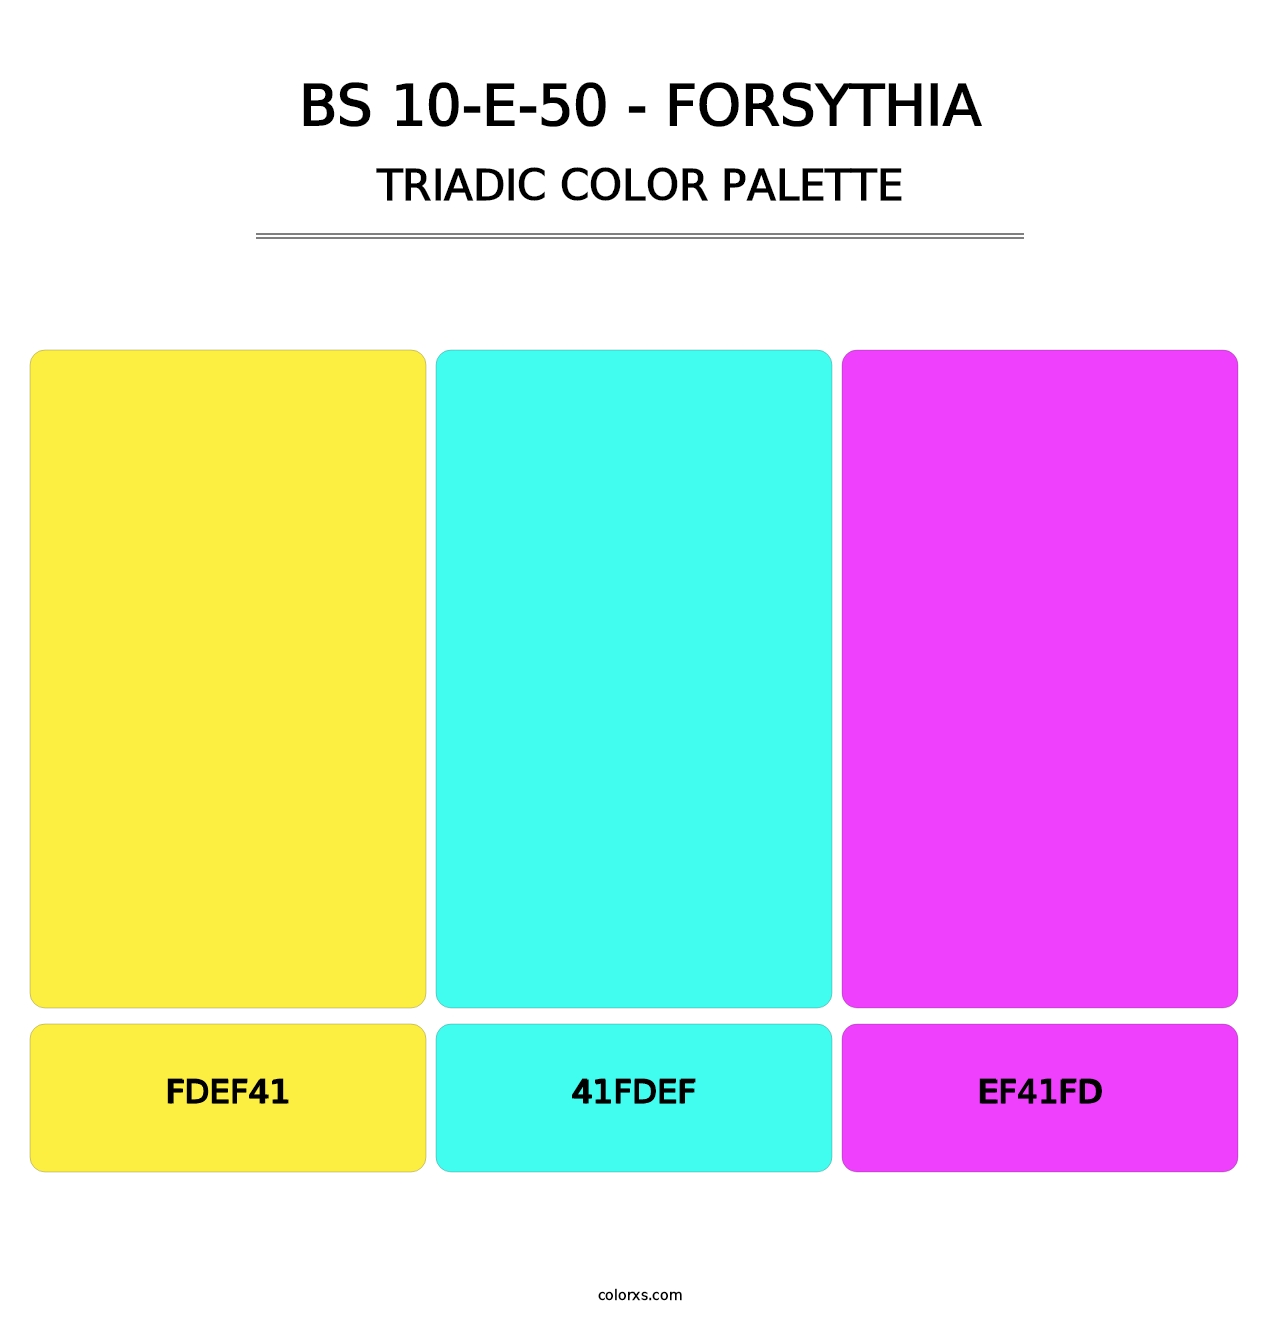 BS 10-E-50 - Forsythia - Triadic Color Palette